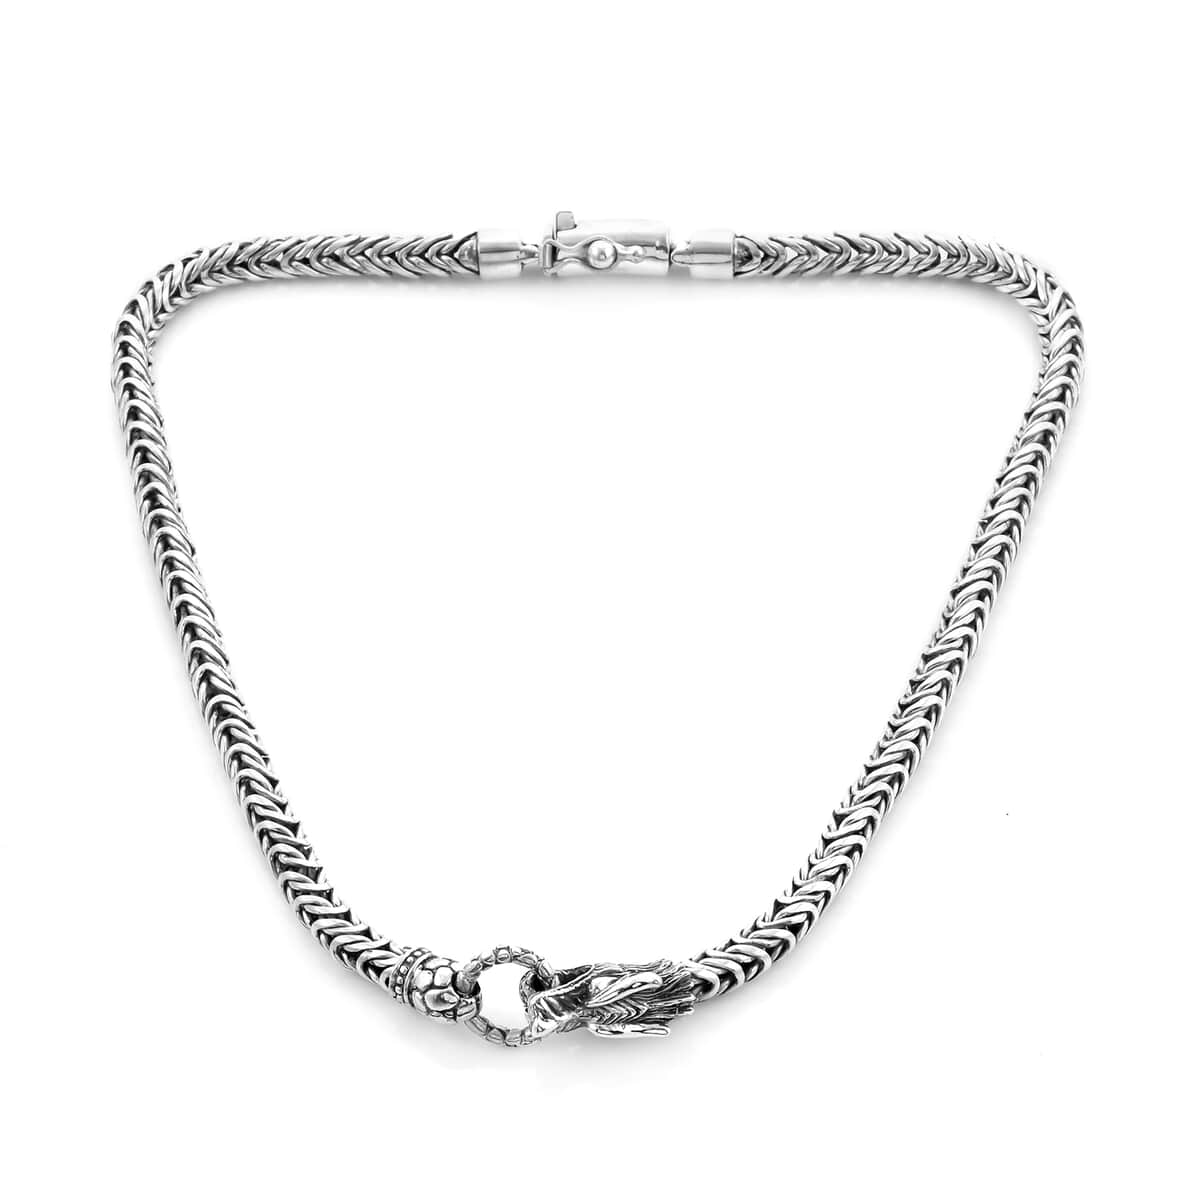 BALI LEGACY Sterling Silver Tulang Naga Necklace 18 Inches 85.90 Grams image number 0